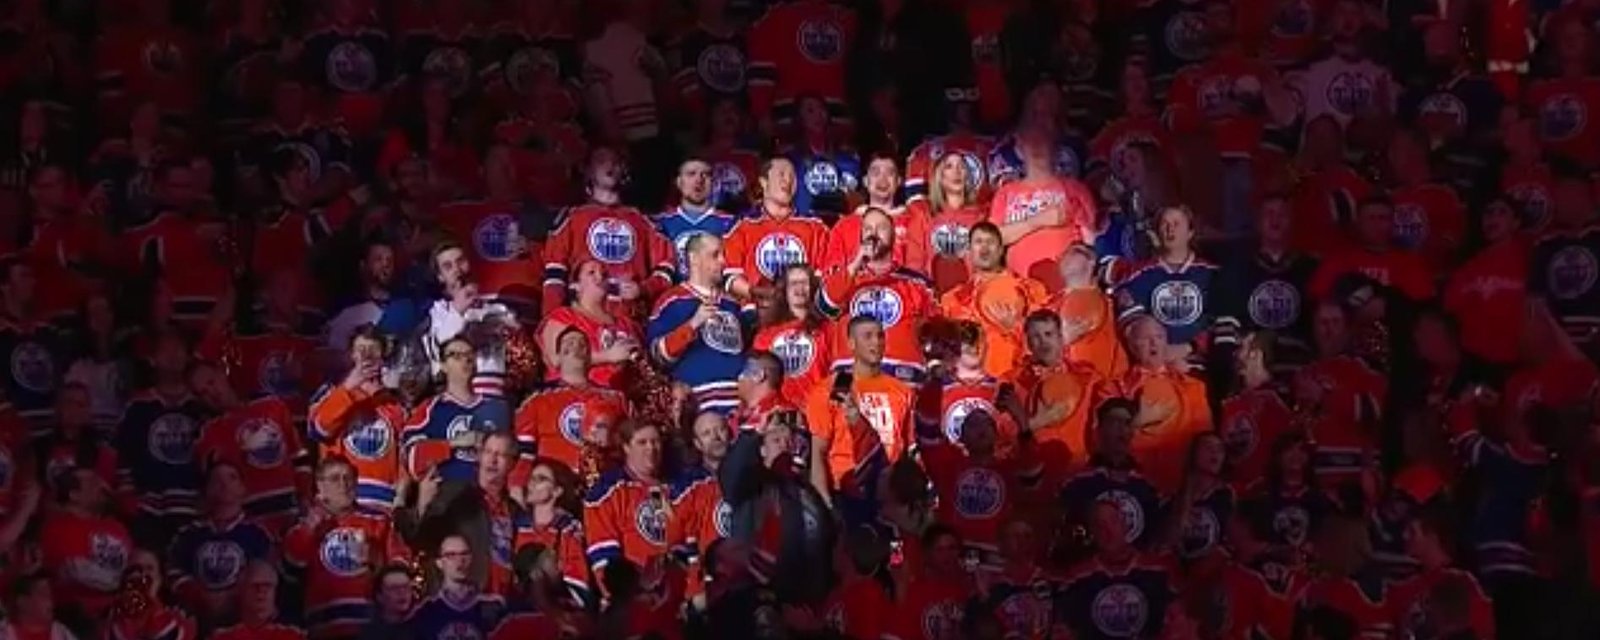 Amazing moment in Edmonton during national anthem. 